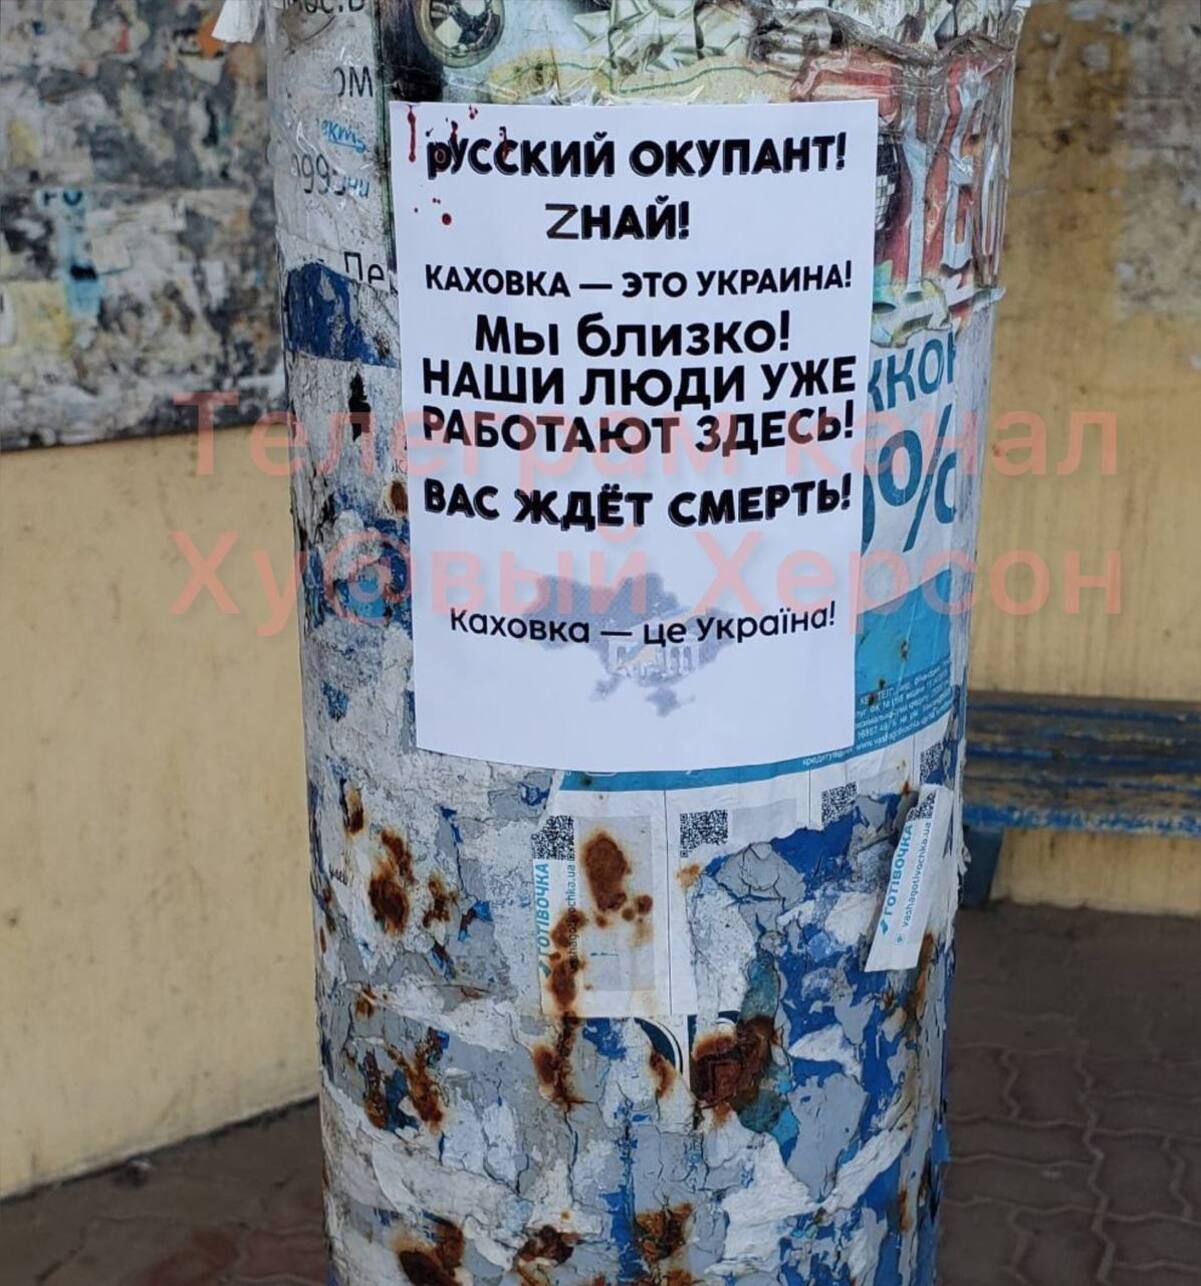 "Бо Каховка – це Україна": партизани залишили окупантам послання